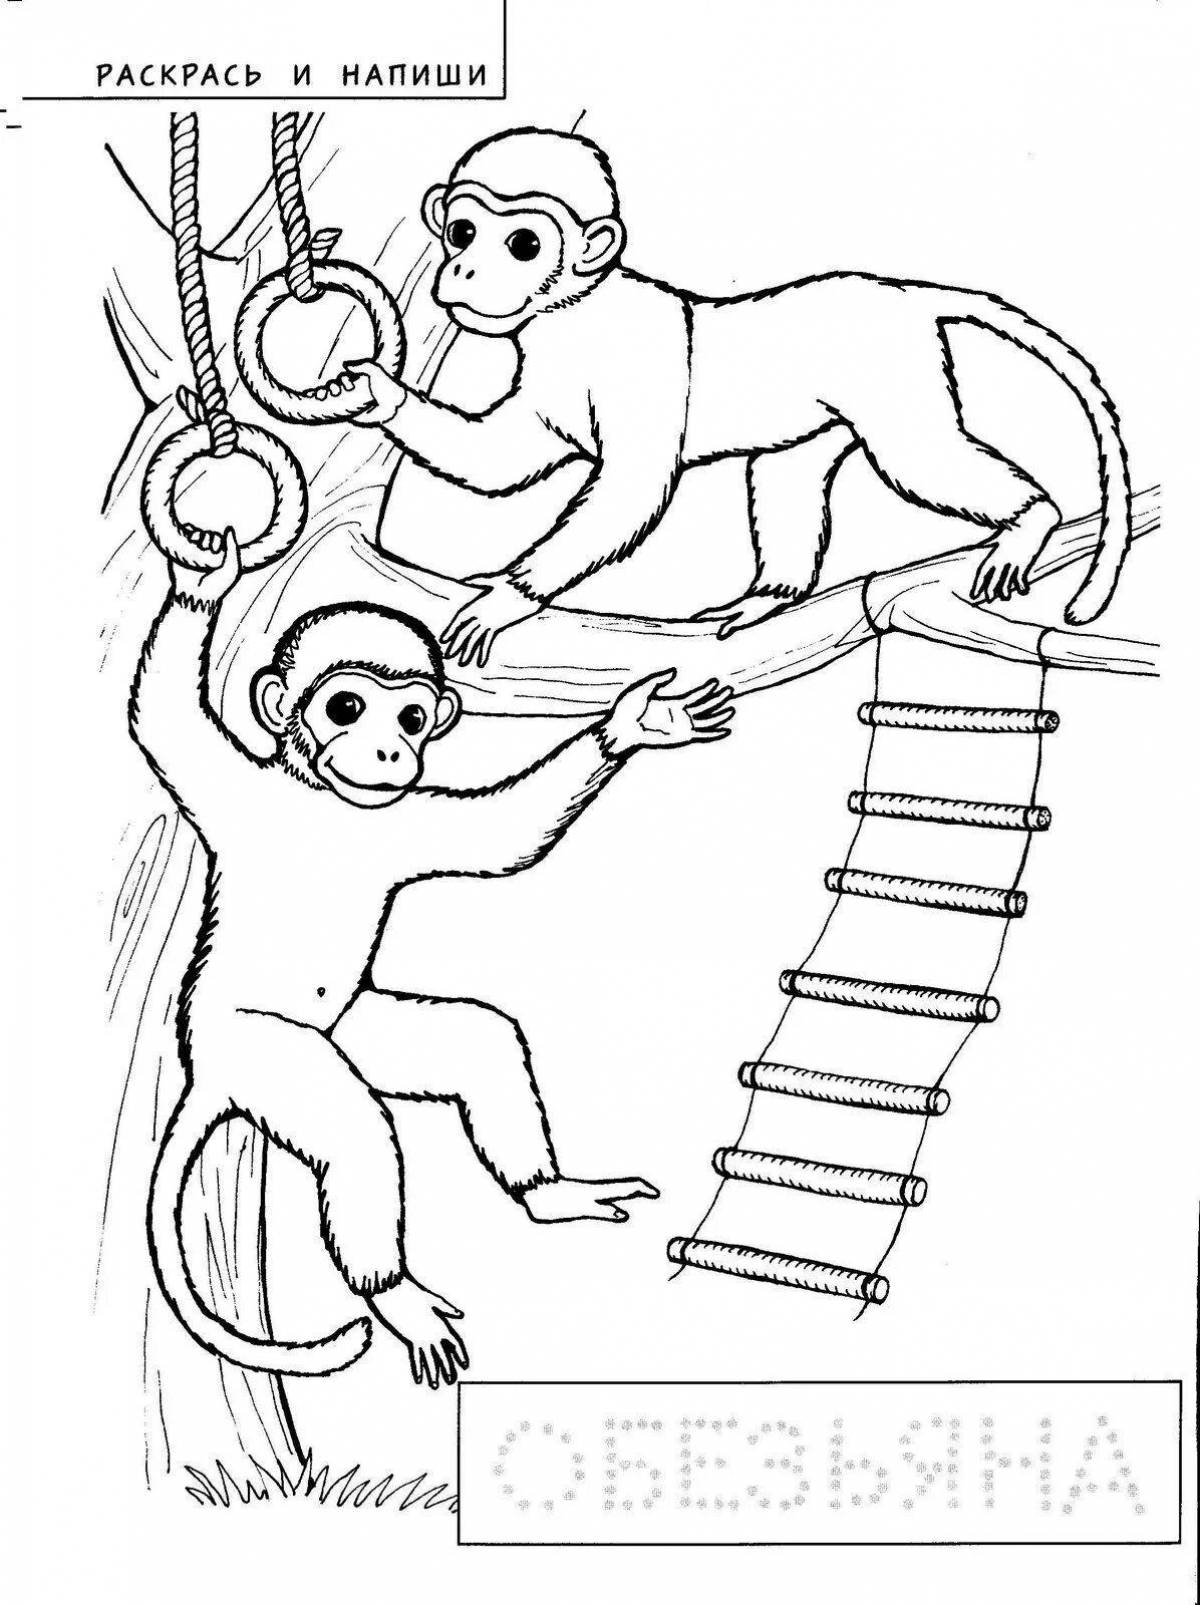 Cheerful monkey zhitkov coloring